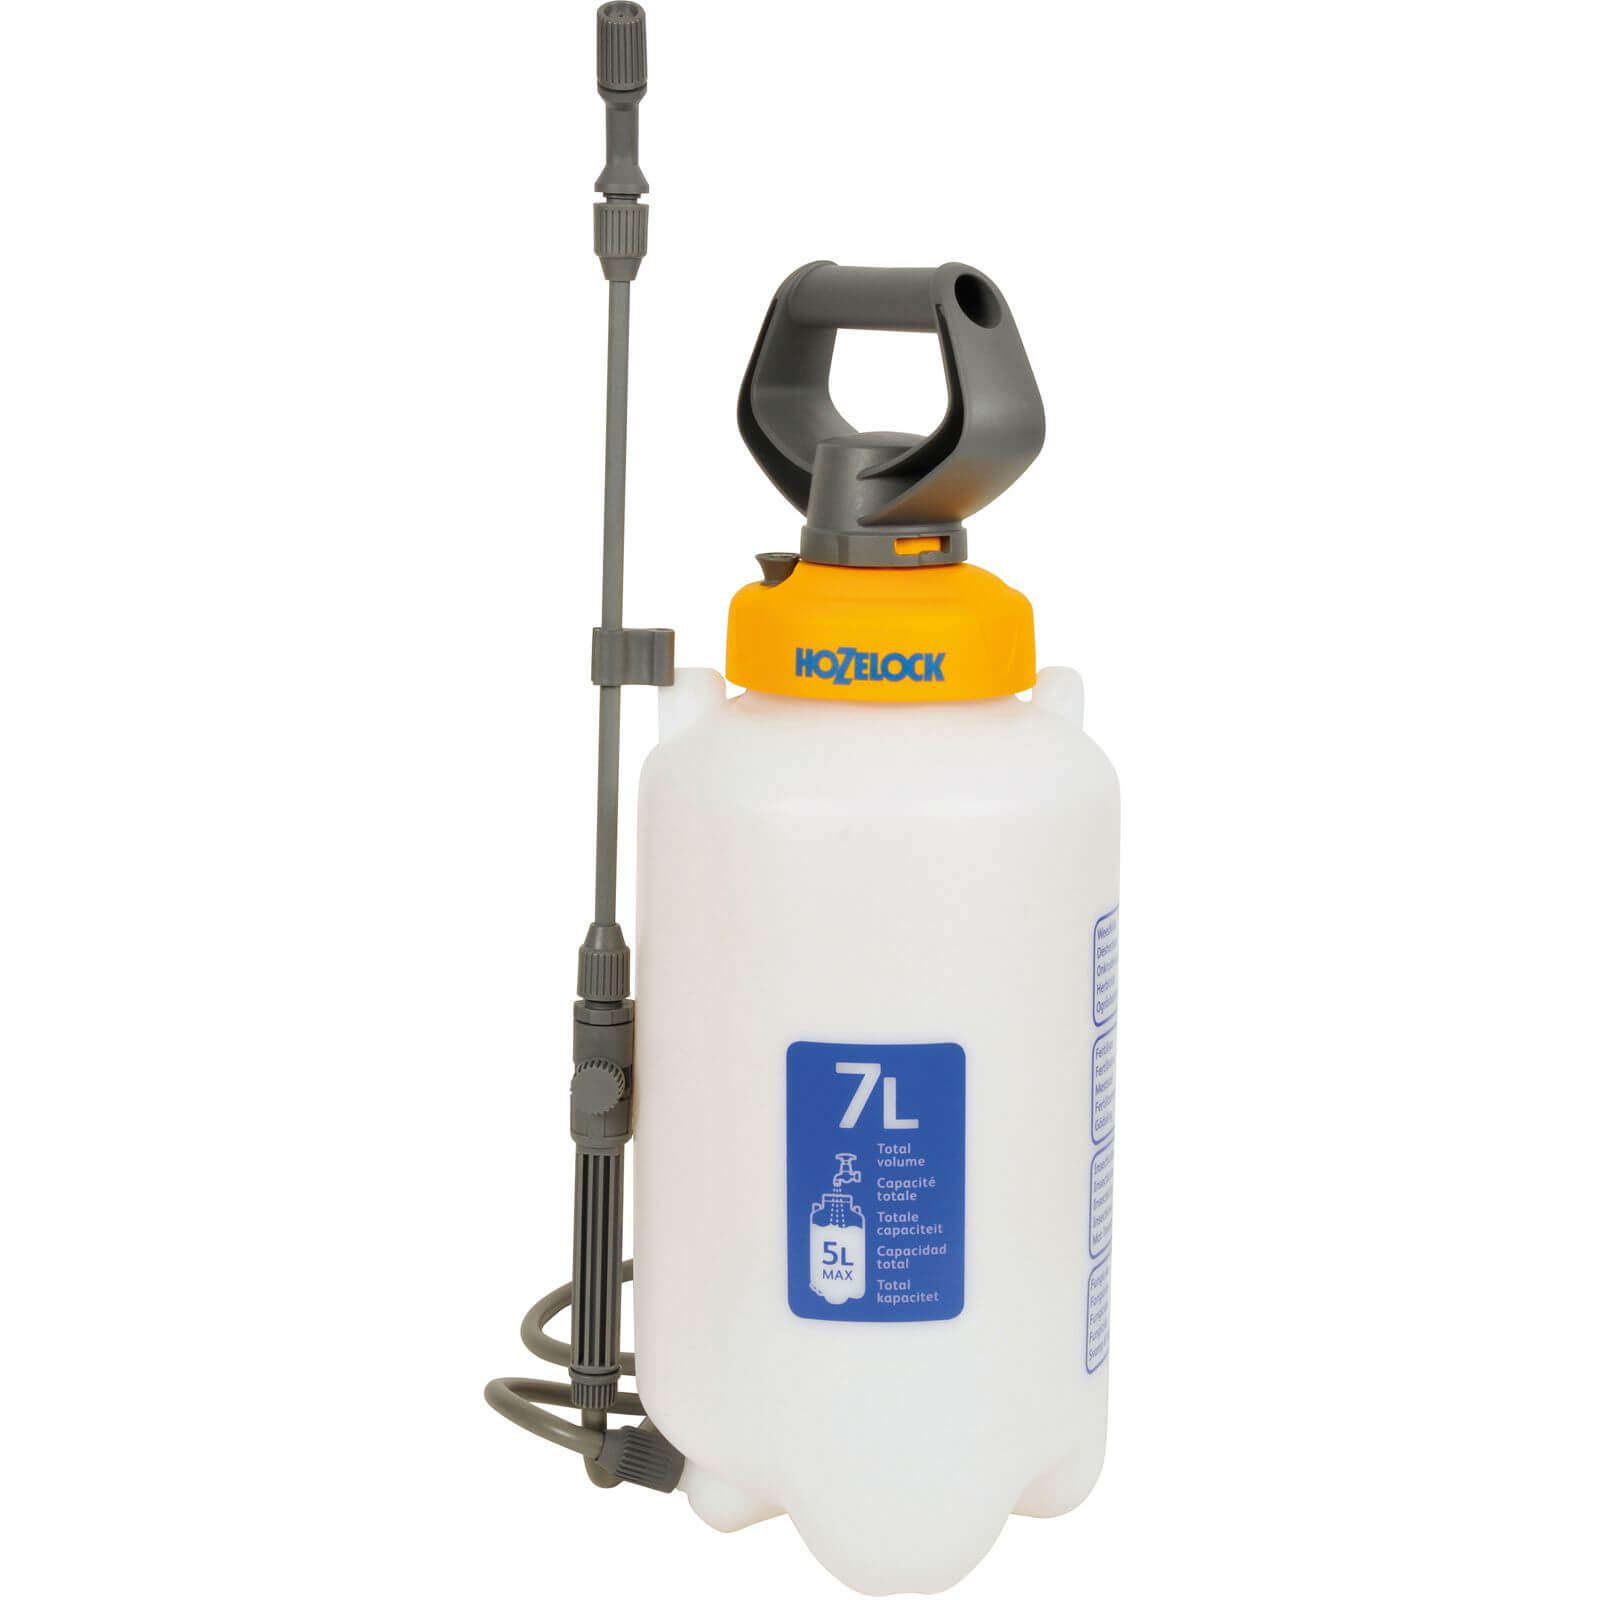 Hozelock Garden Pressure Sprayer - 7L